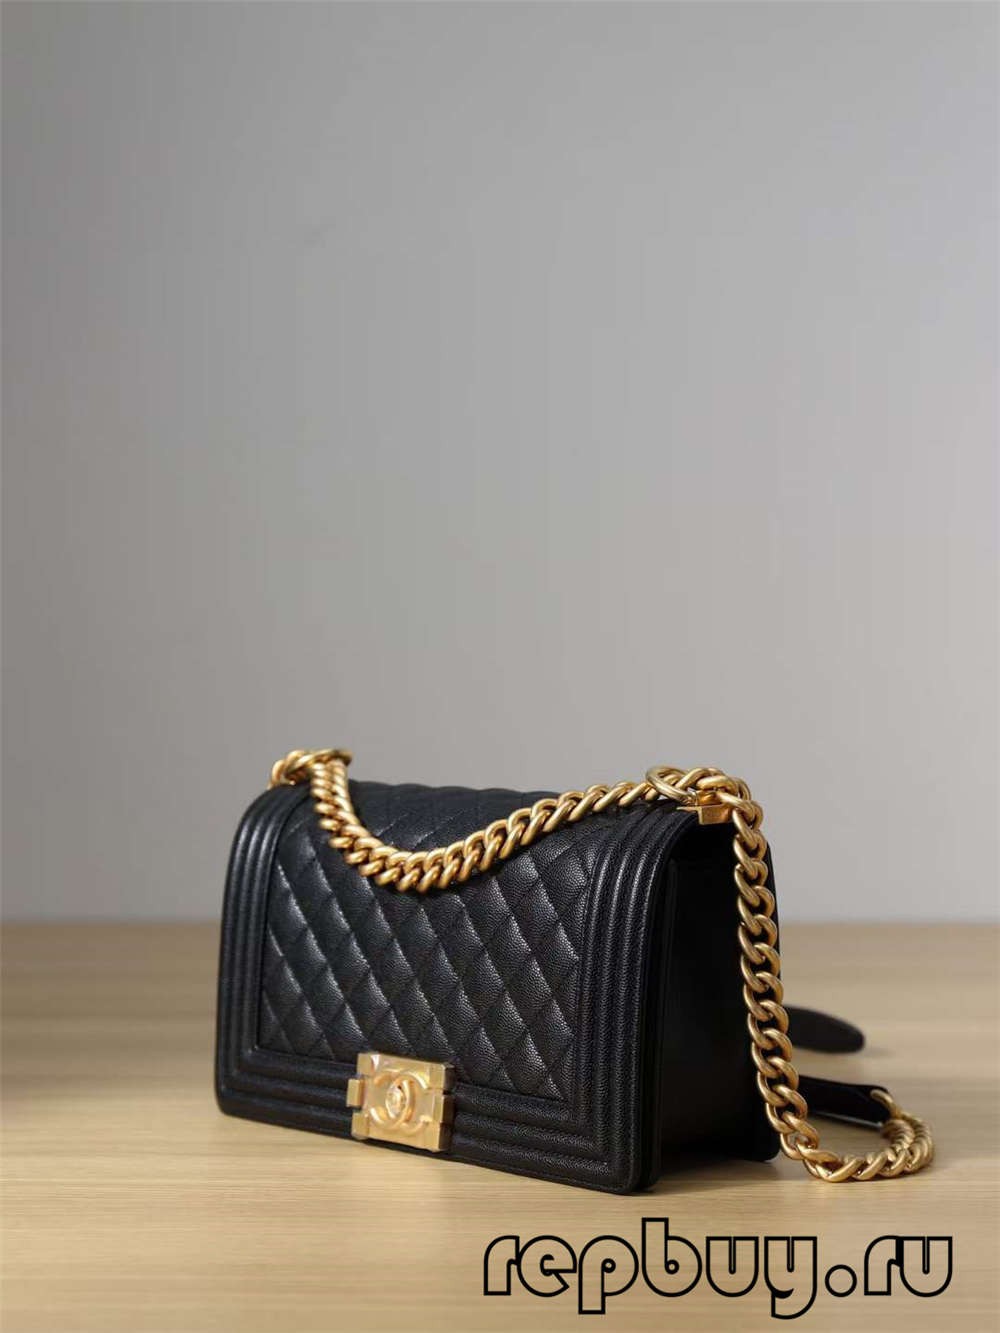 Chanel Leboy Top Replica Handbag Medium Gold Buckle (2022 Edition) - Tas Louis Vuitton Palsu Kualitas Terbaik Toko Online, Replica designer bag ru